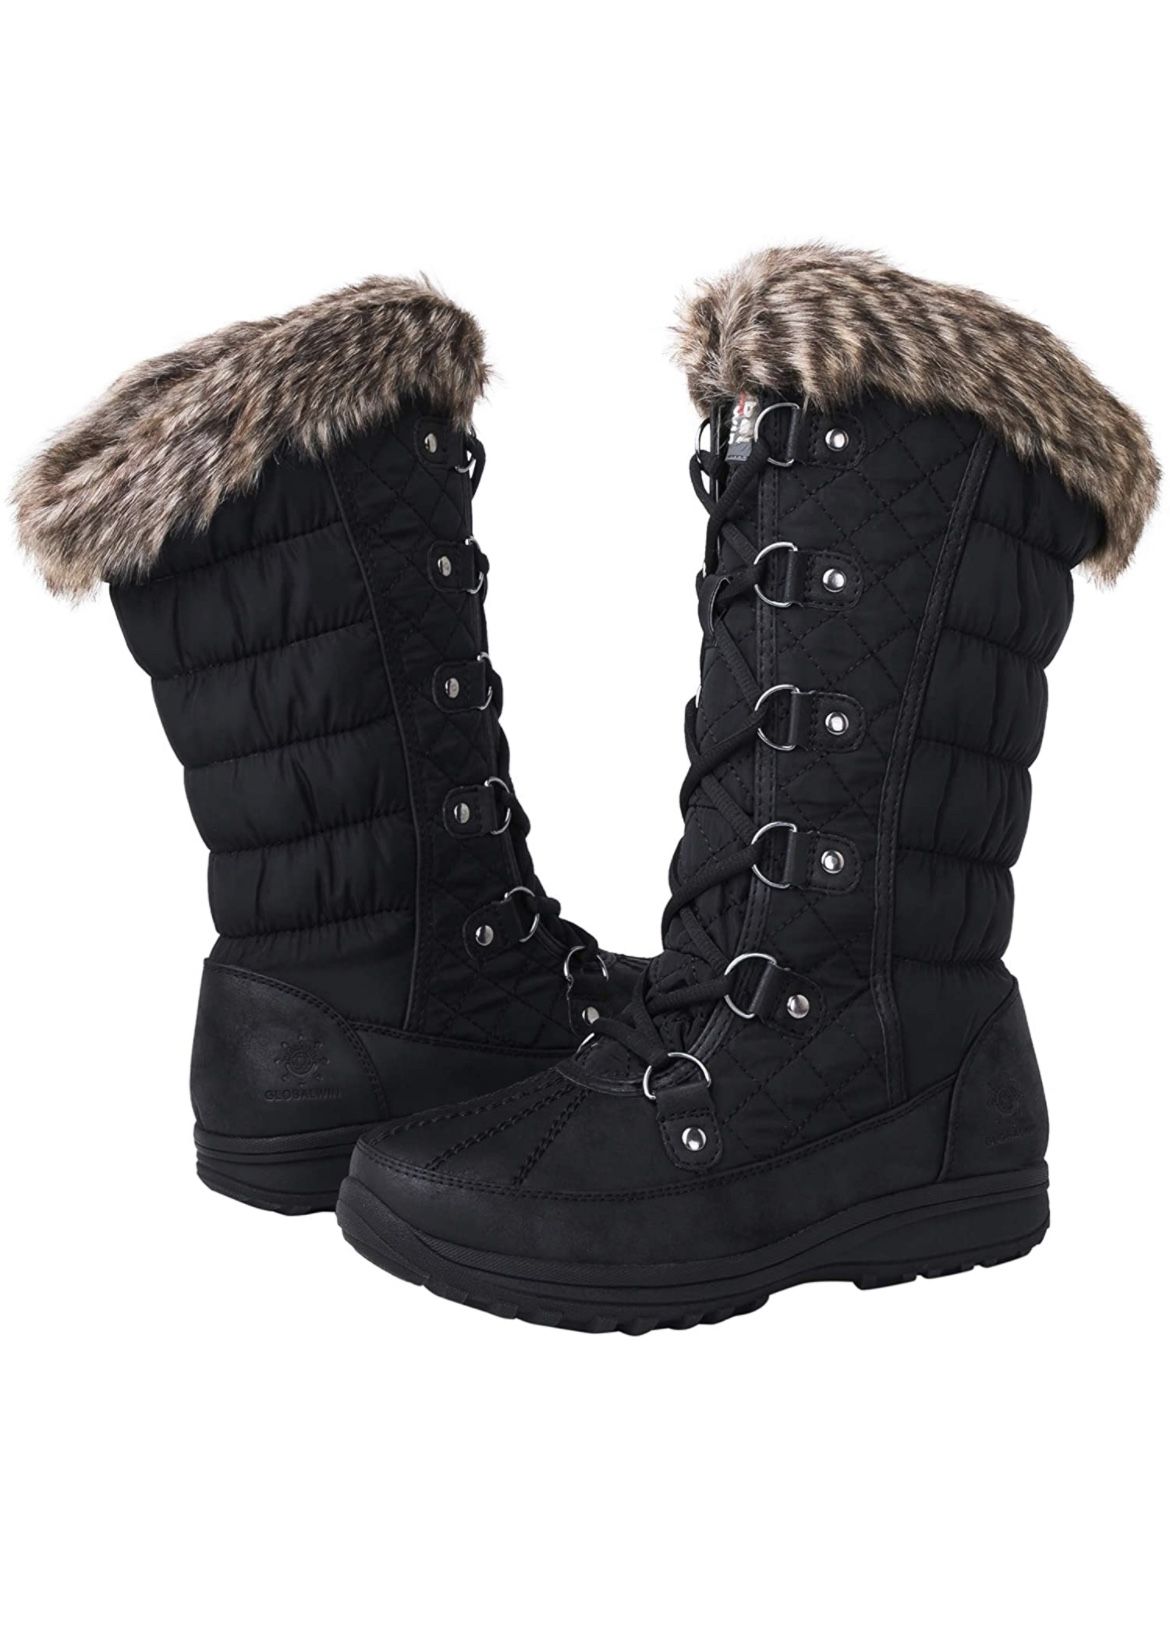 GLOBALWIN Women's  Snow Boots Size 8